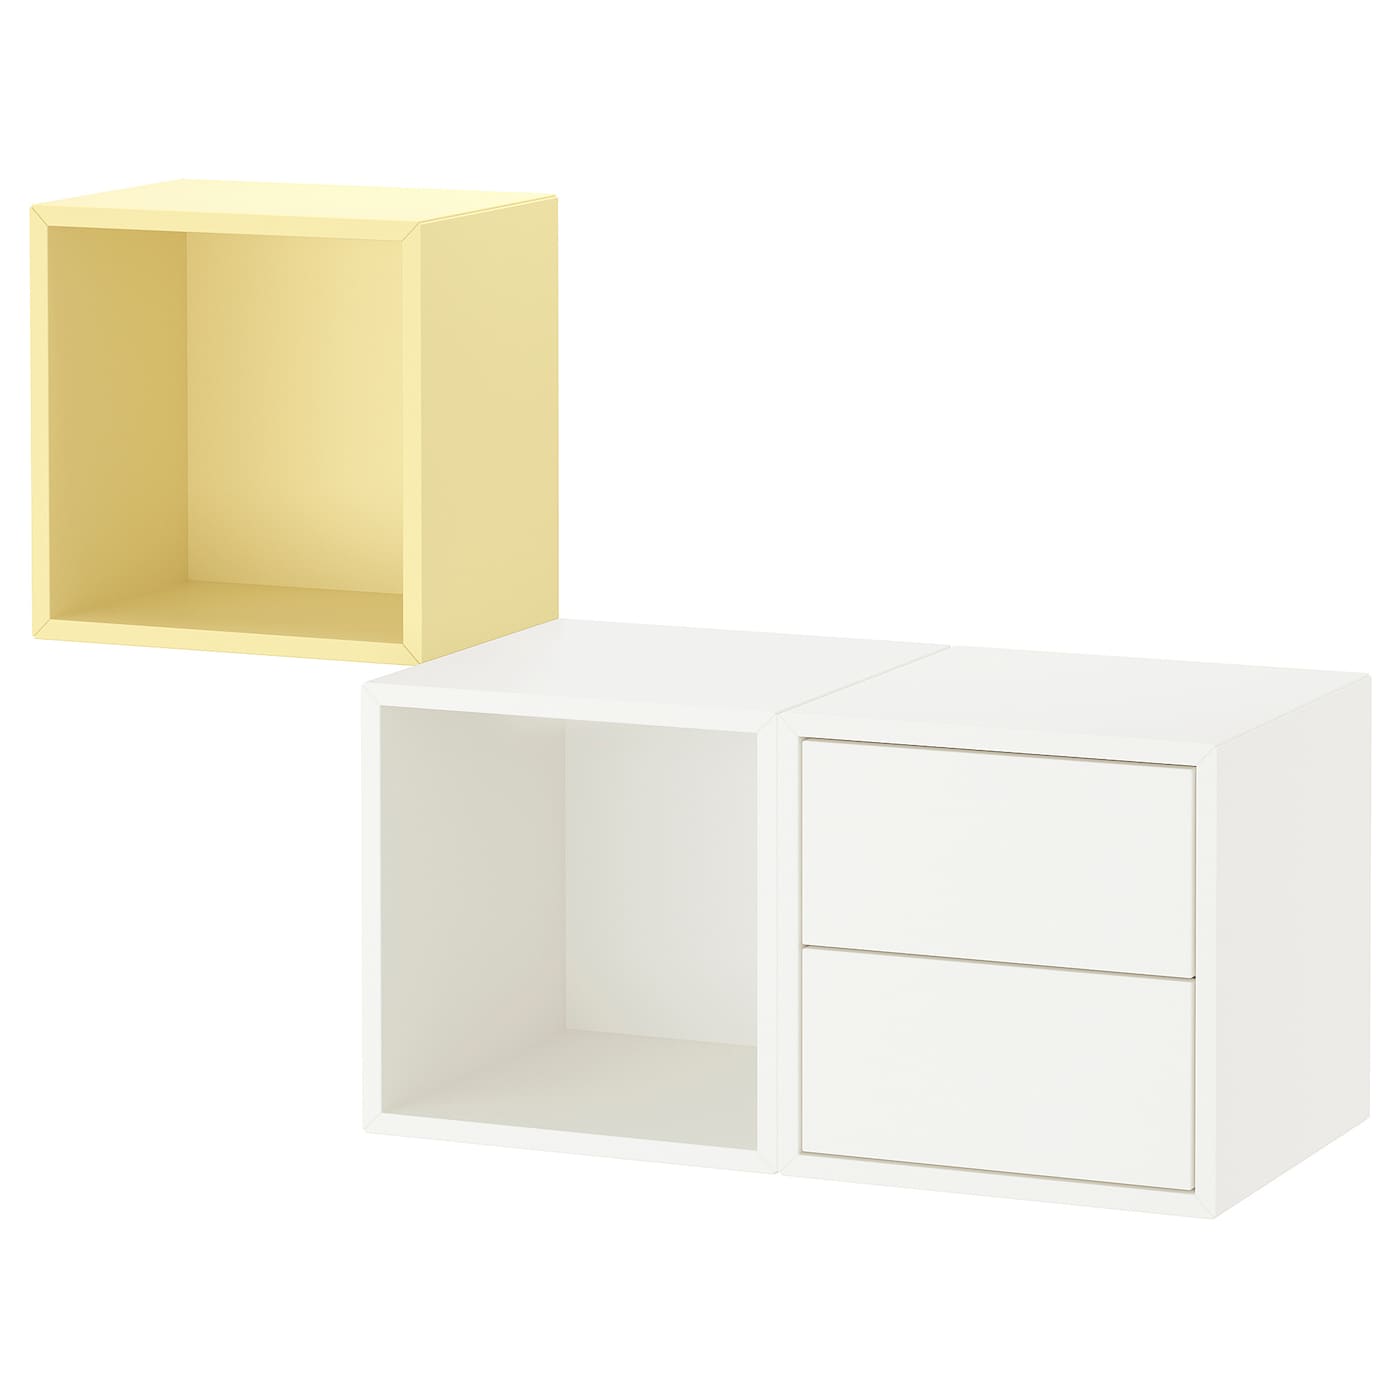 Комбинация для хранения - EKET IKEA/ ЭКЕТ ИКЕА,  105х70 см,   желтый/белый